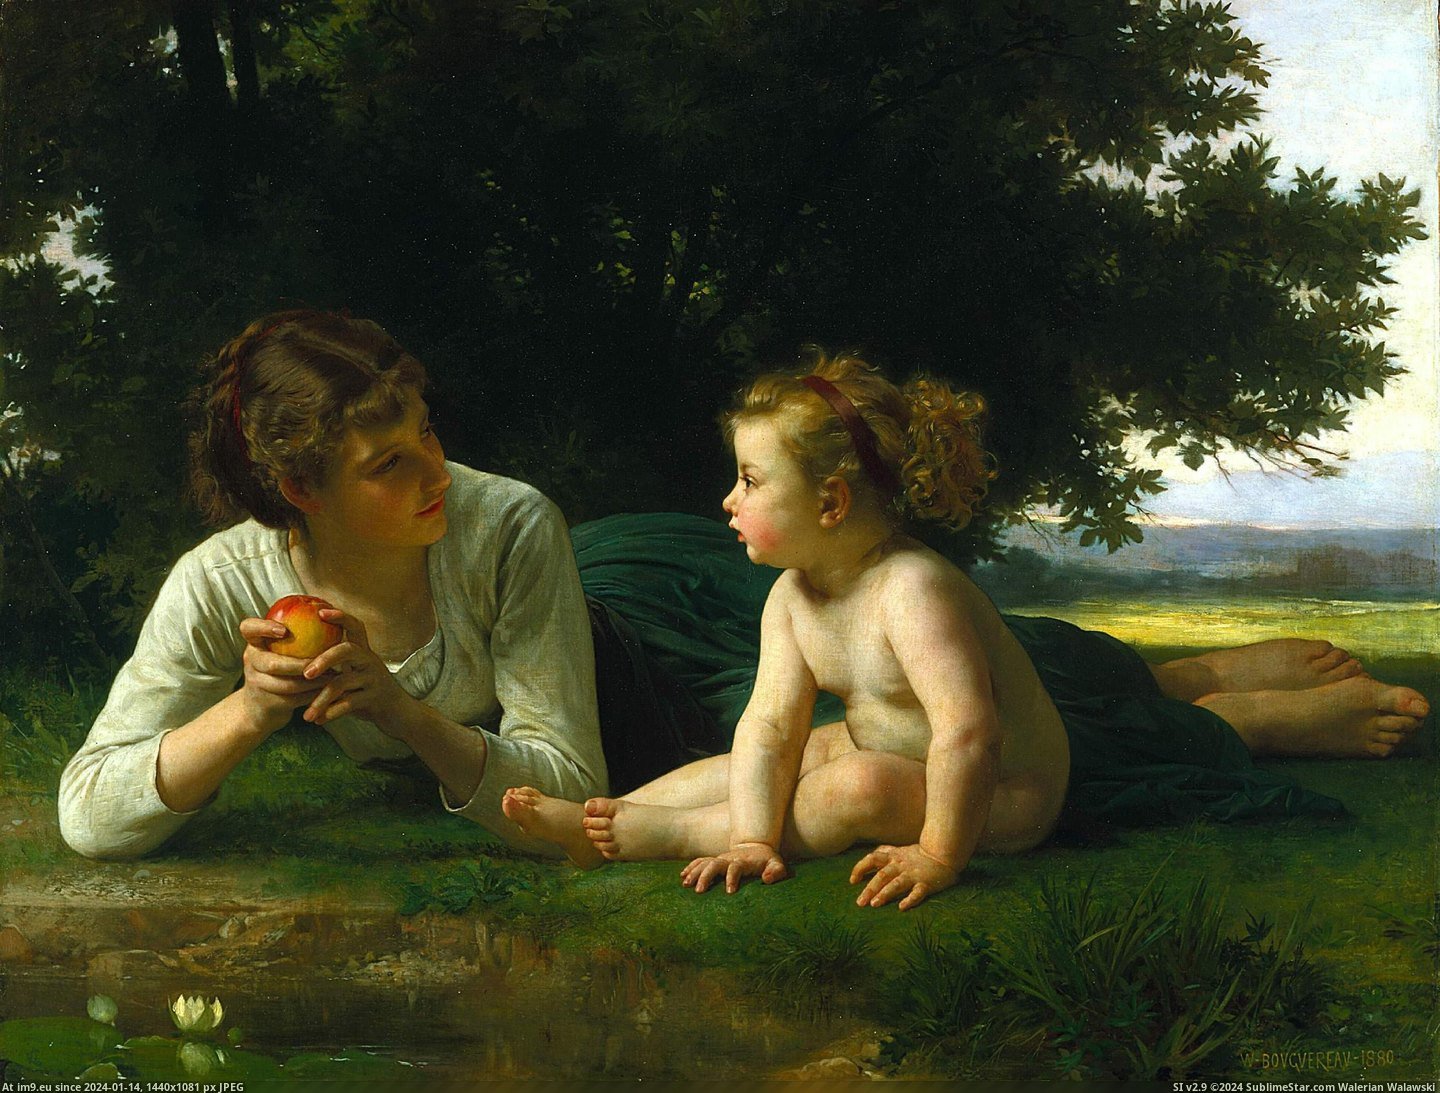 (1880) Temptation - William Adolphe Bouguereau (in William Adolphe Bouguereau paintings (1825-1905))